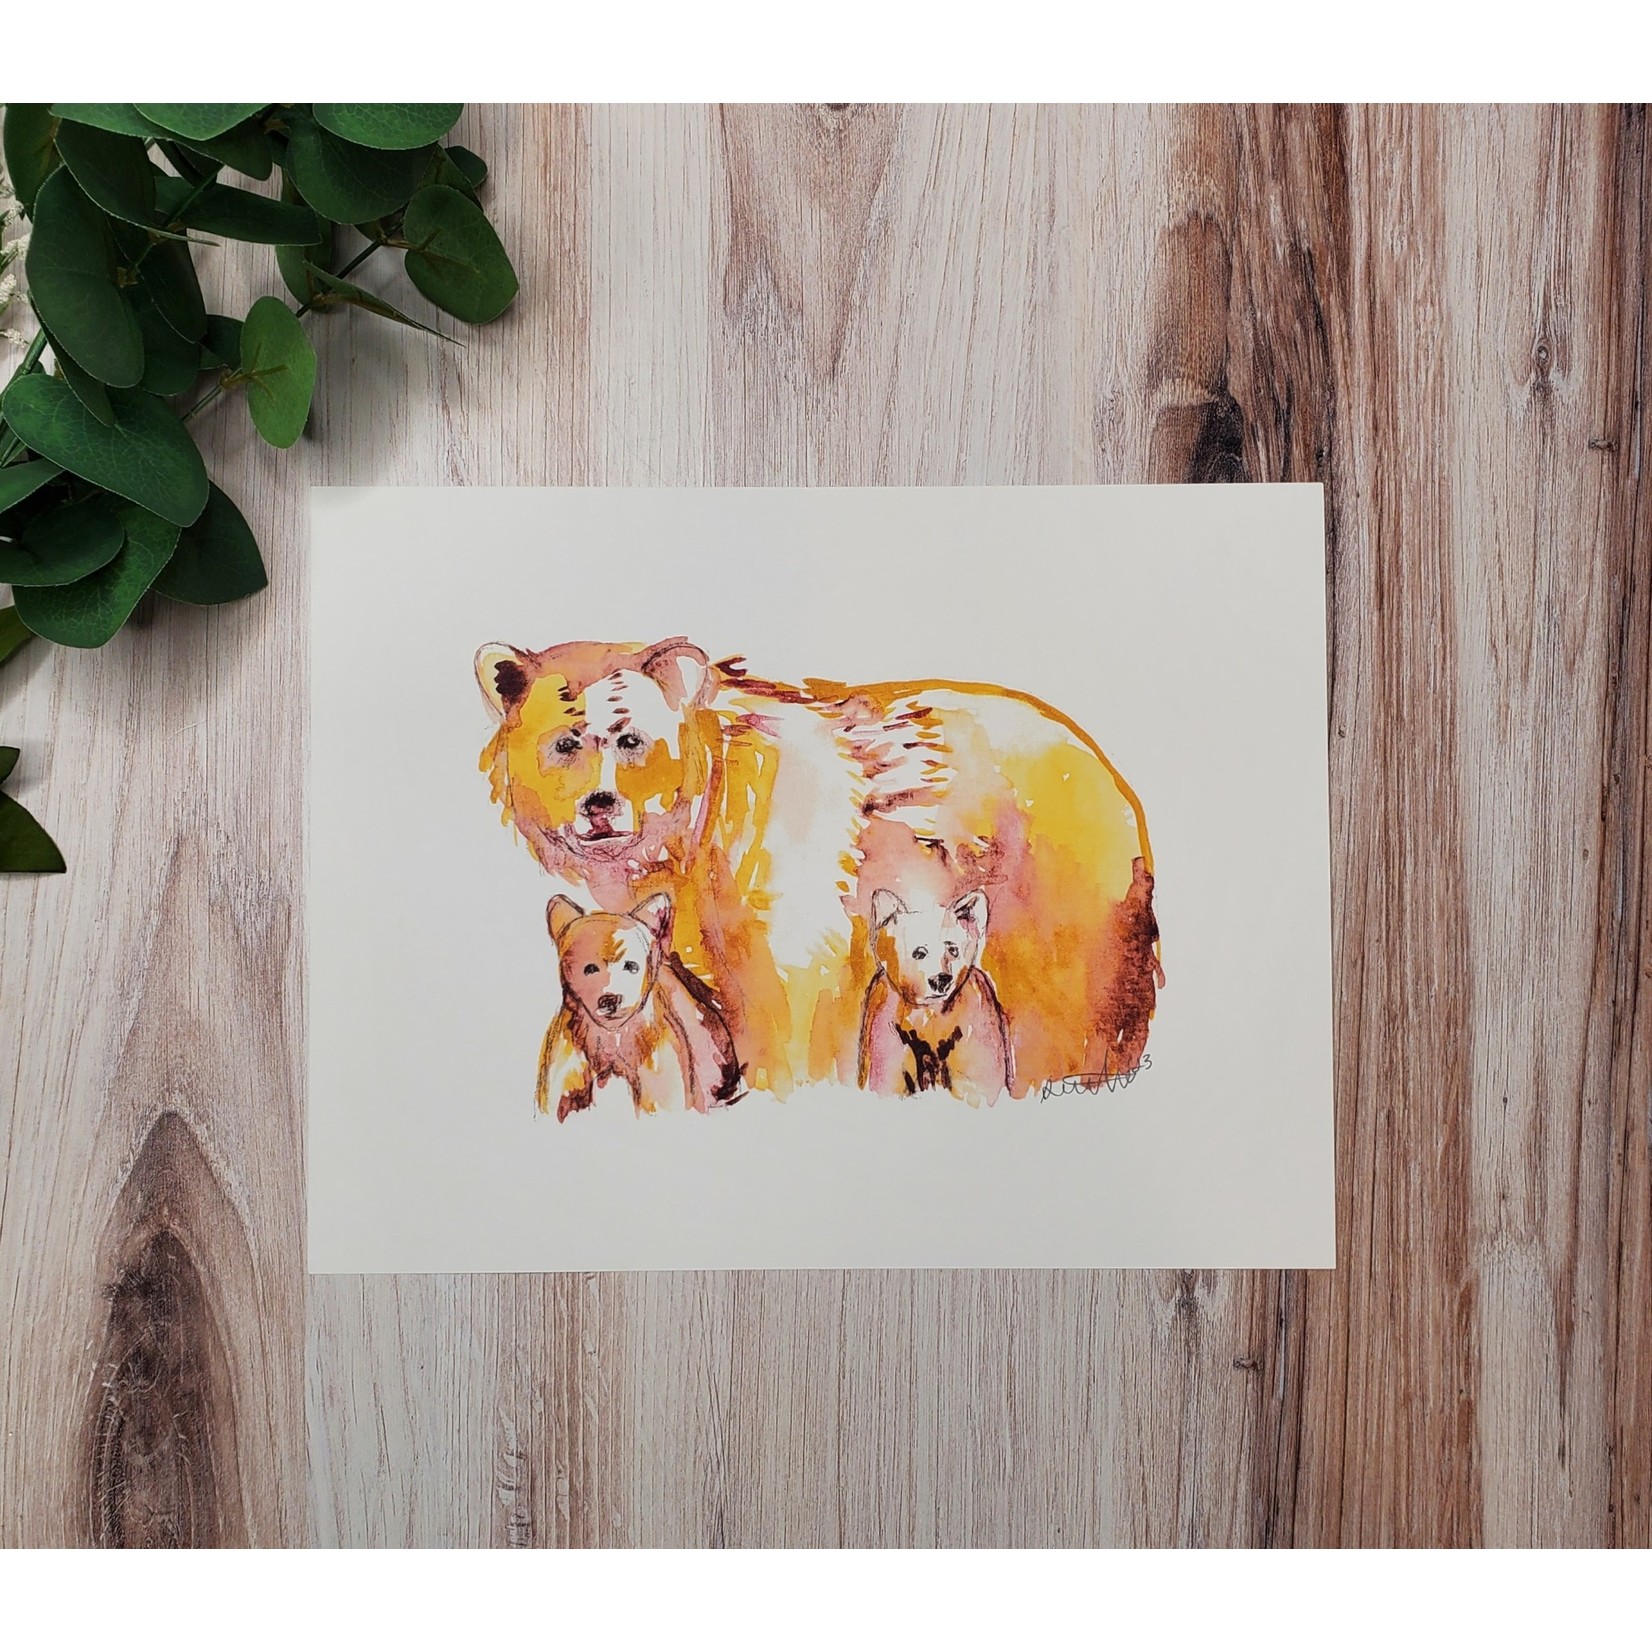 Pollywog Prints "Mama Bear & Cubs" - Giclee Print